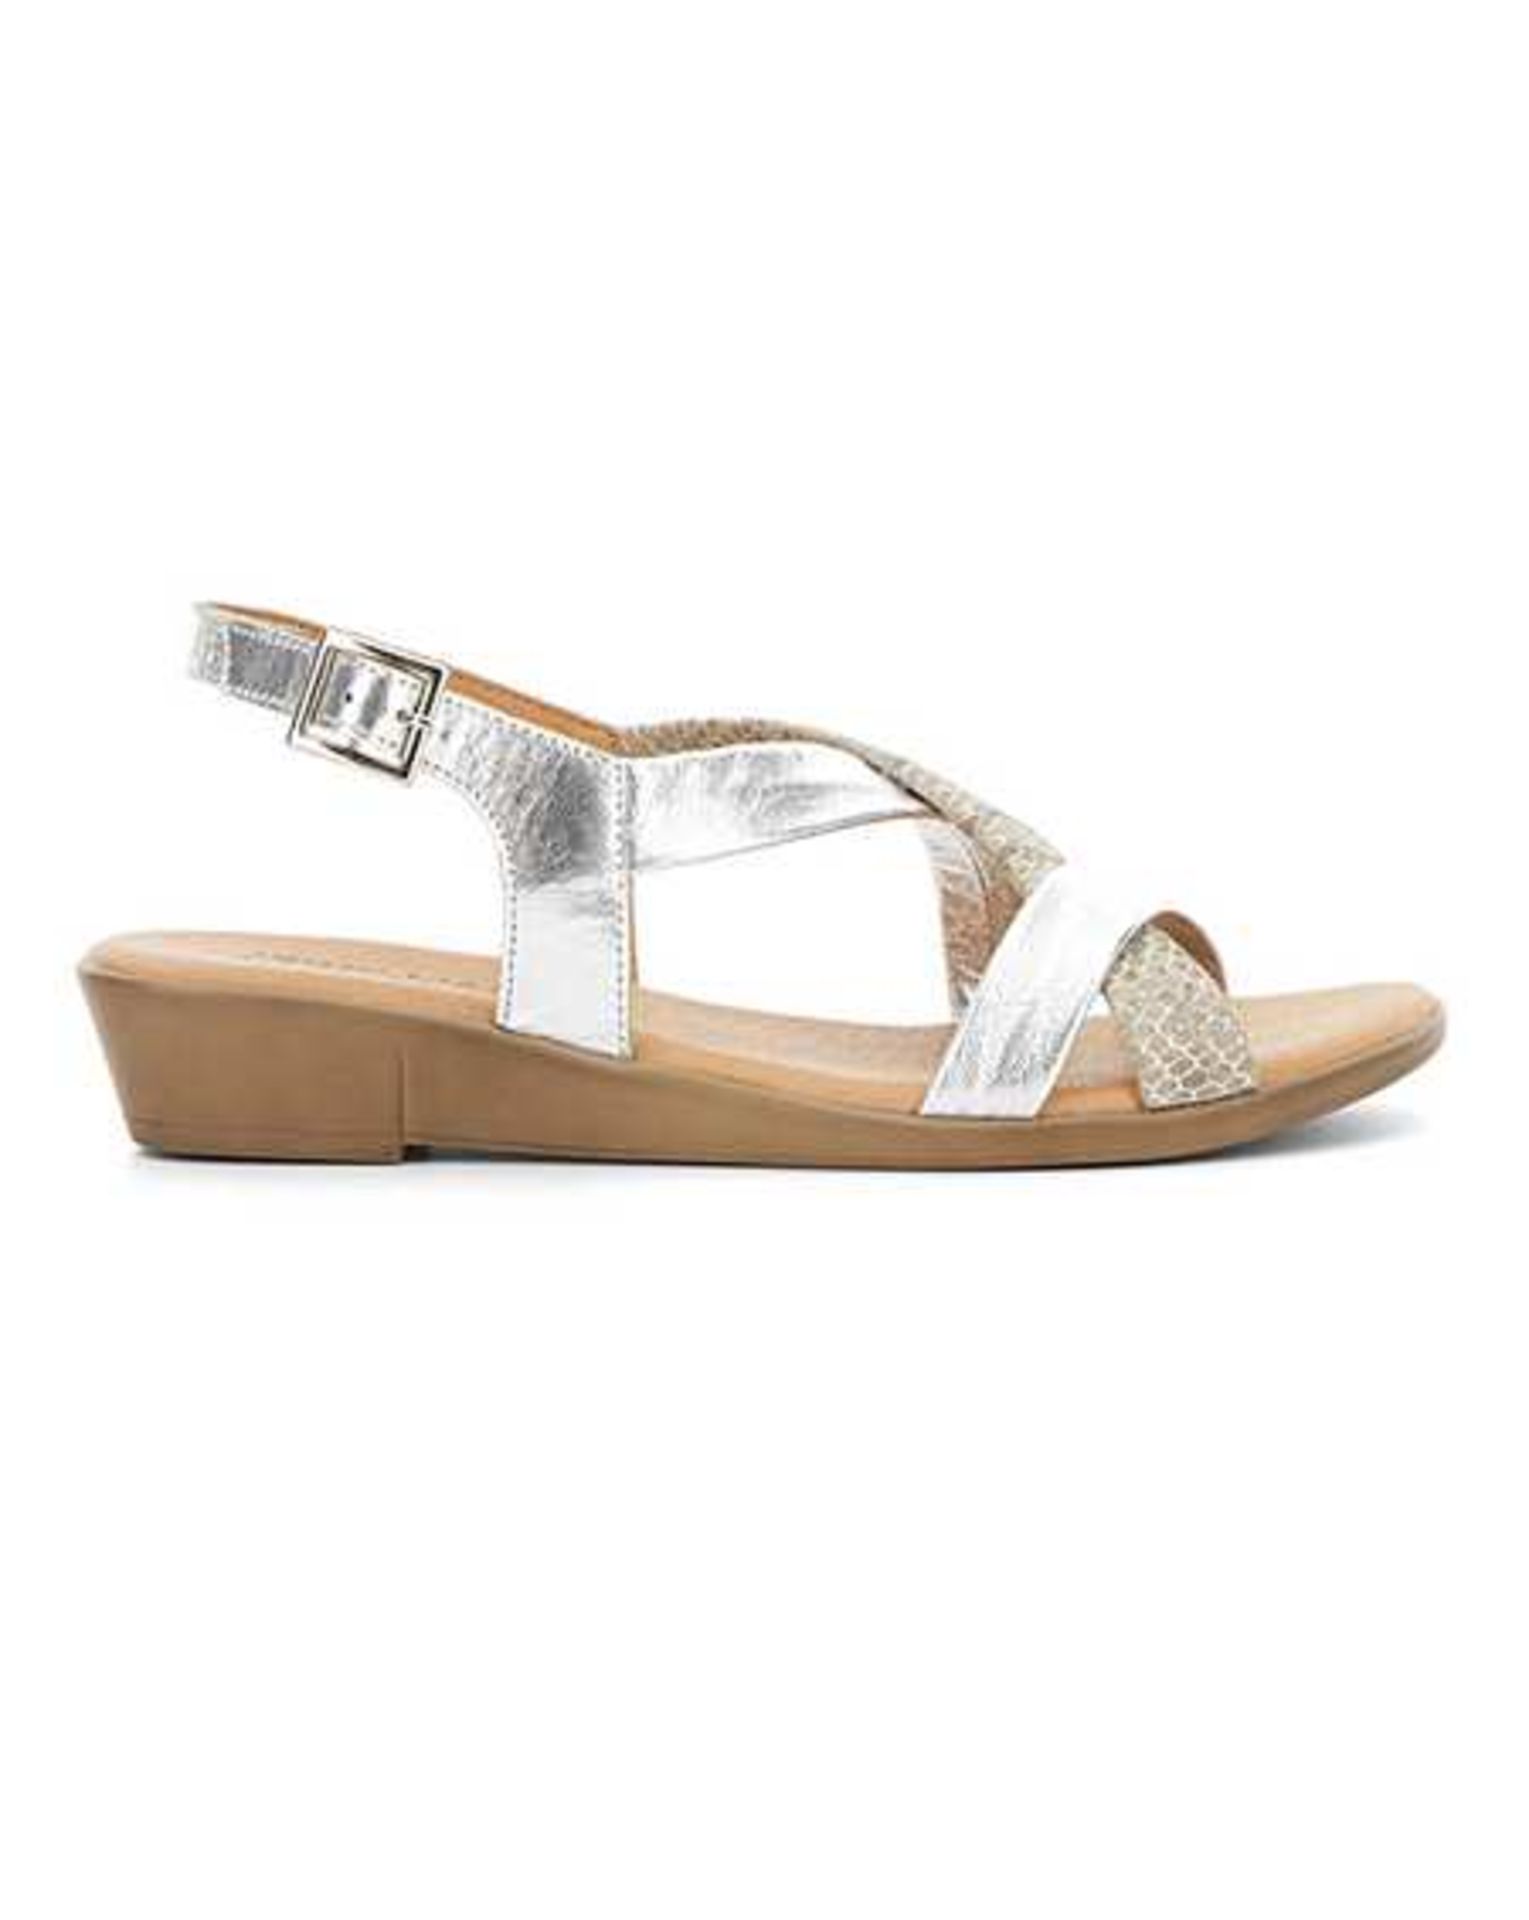 + VAT Brand New Pair Ladies Silver Sandals Size 6